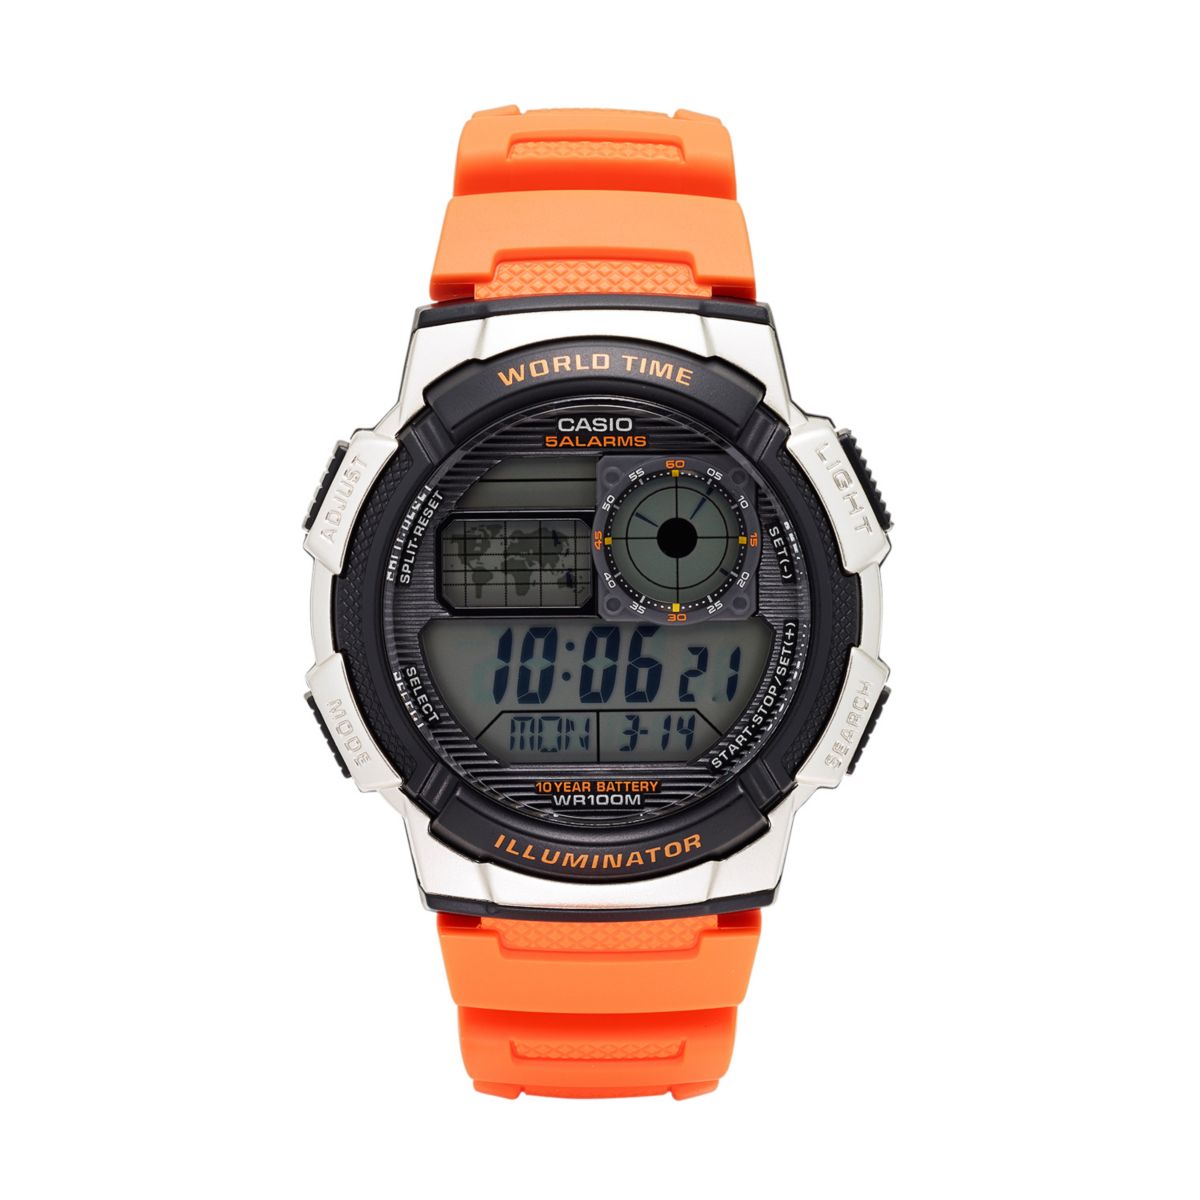 Мужские часы с цифровым хронографом Casio World Time - AE1000W-4BVCF Casio